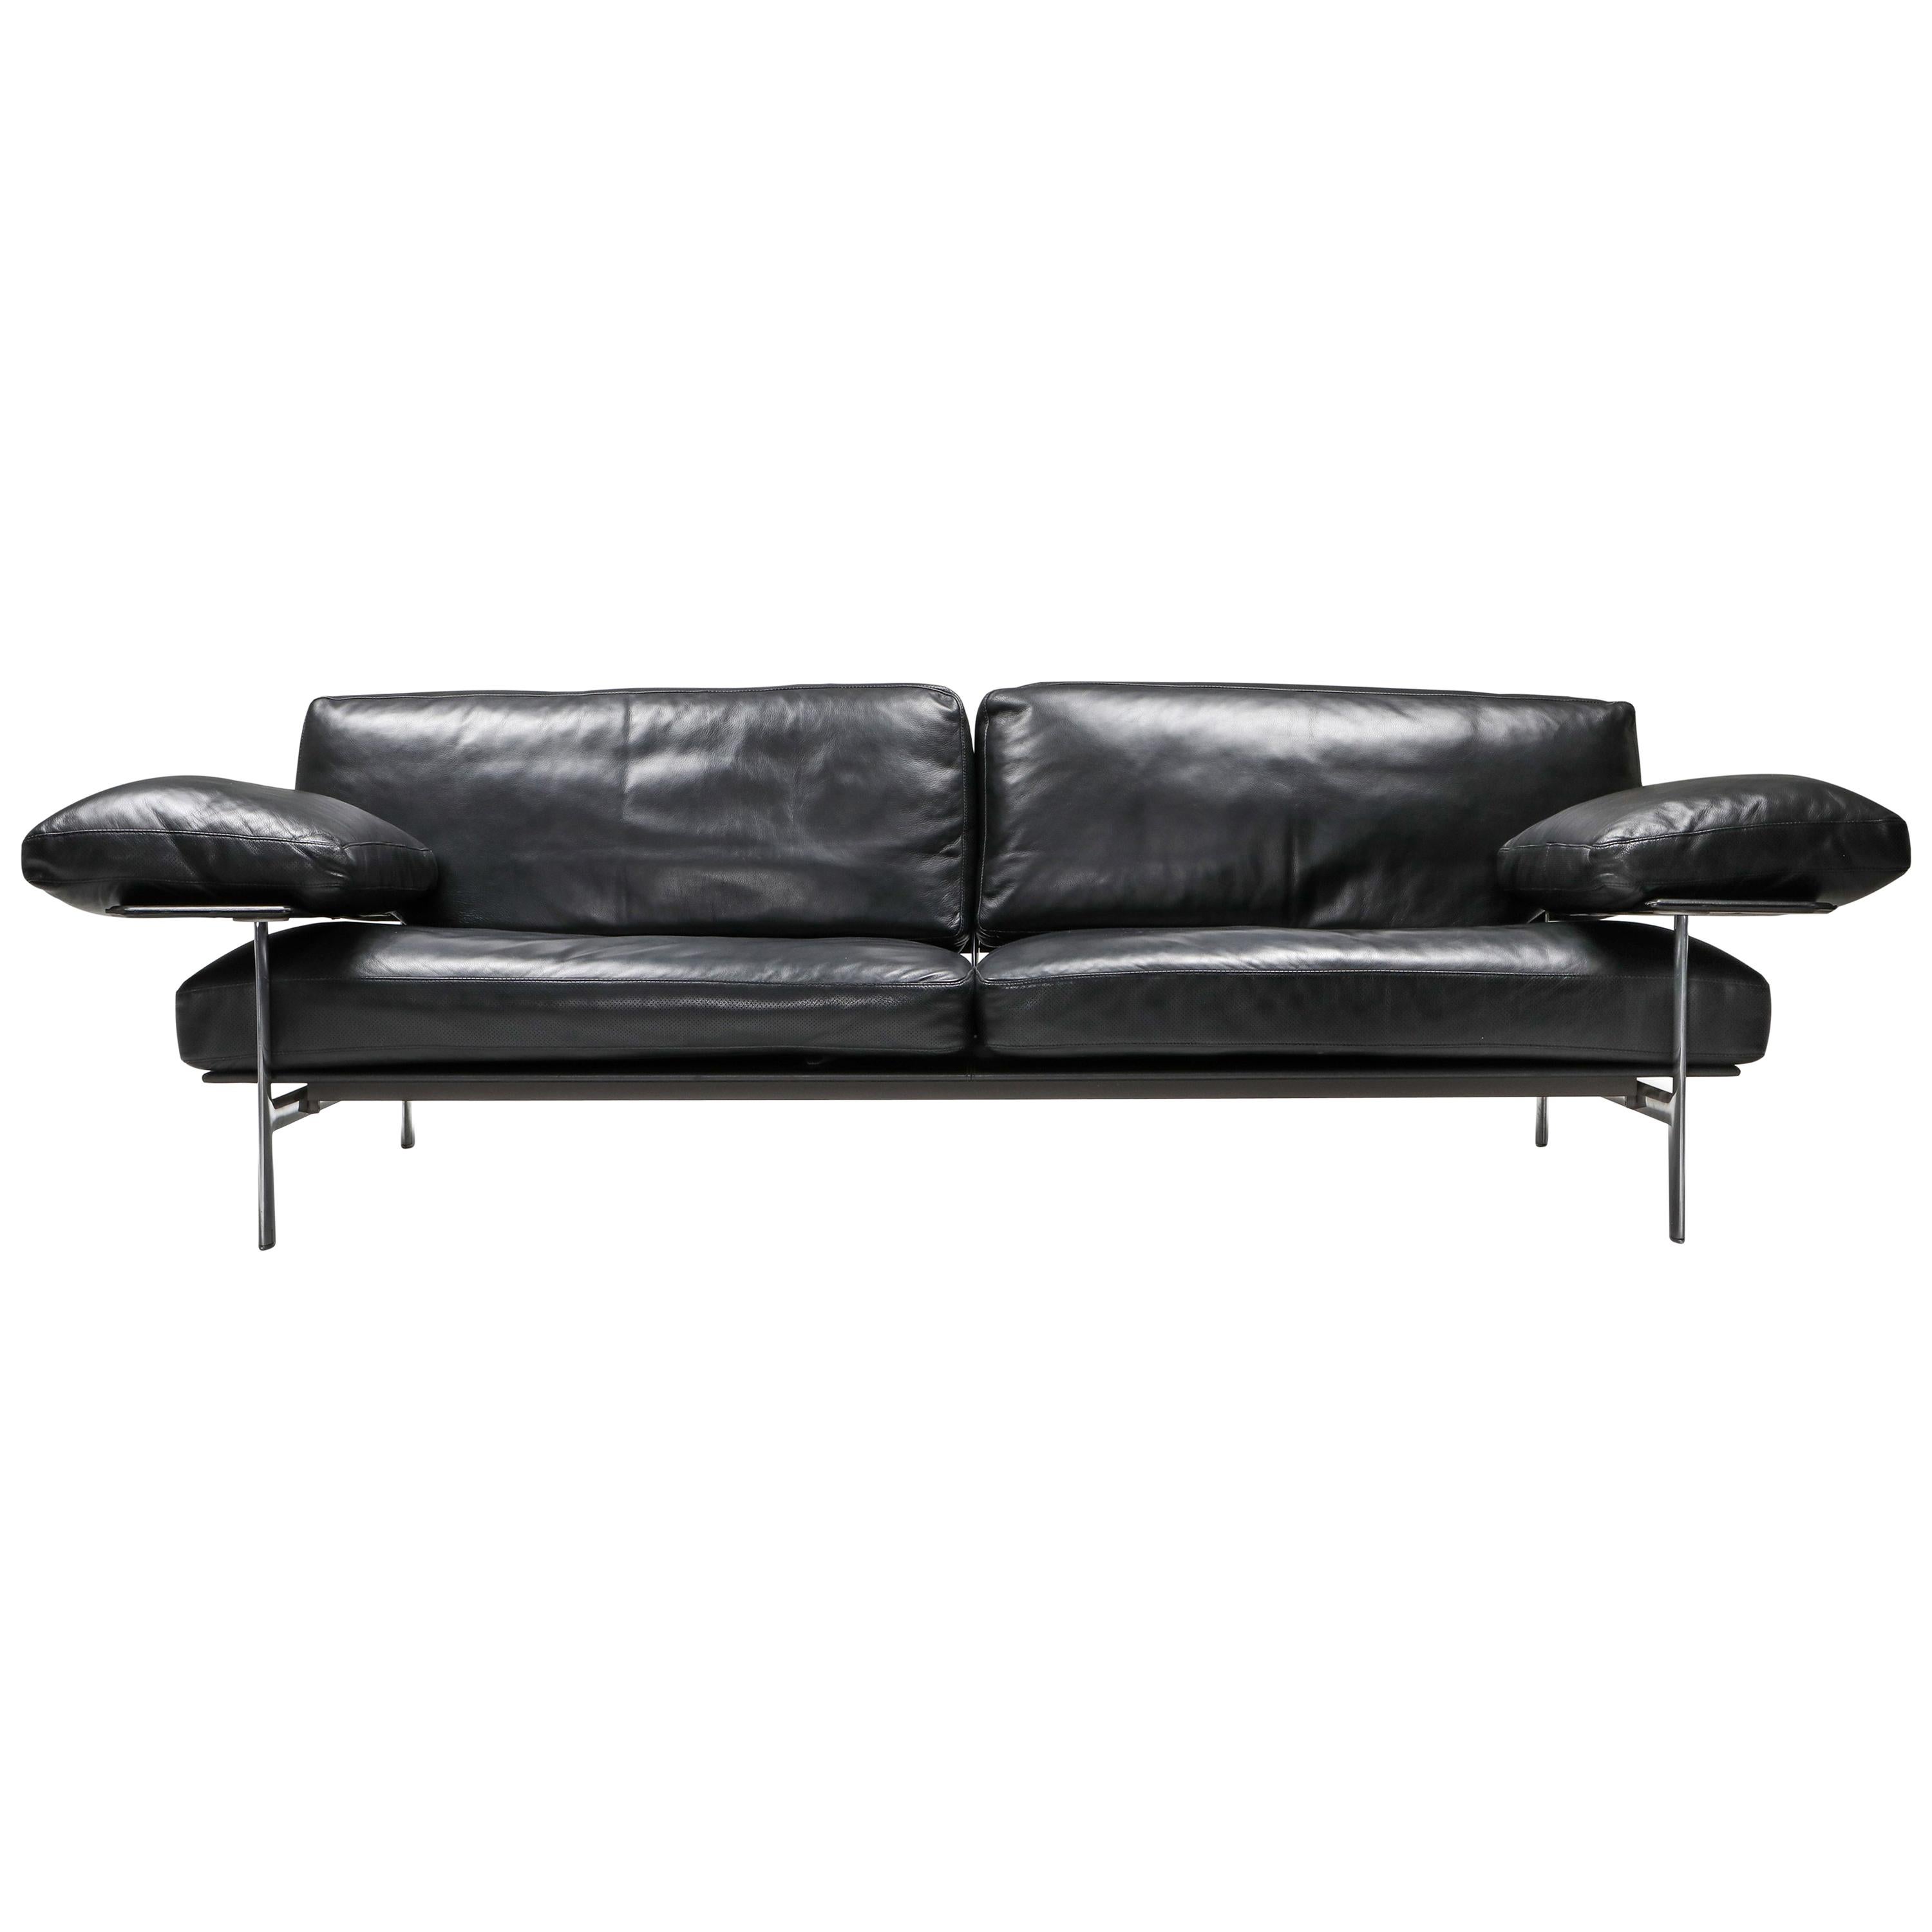 Diesis Sofa in Black Leather by Antonio Citterio & Nava for B&B Italia